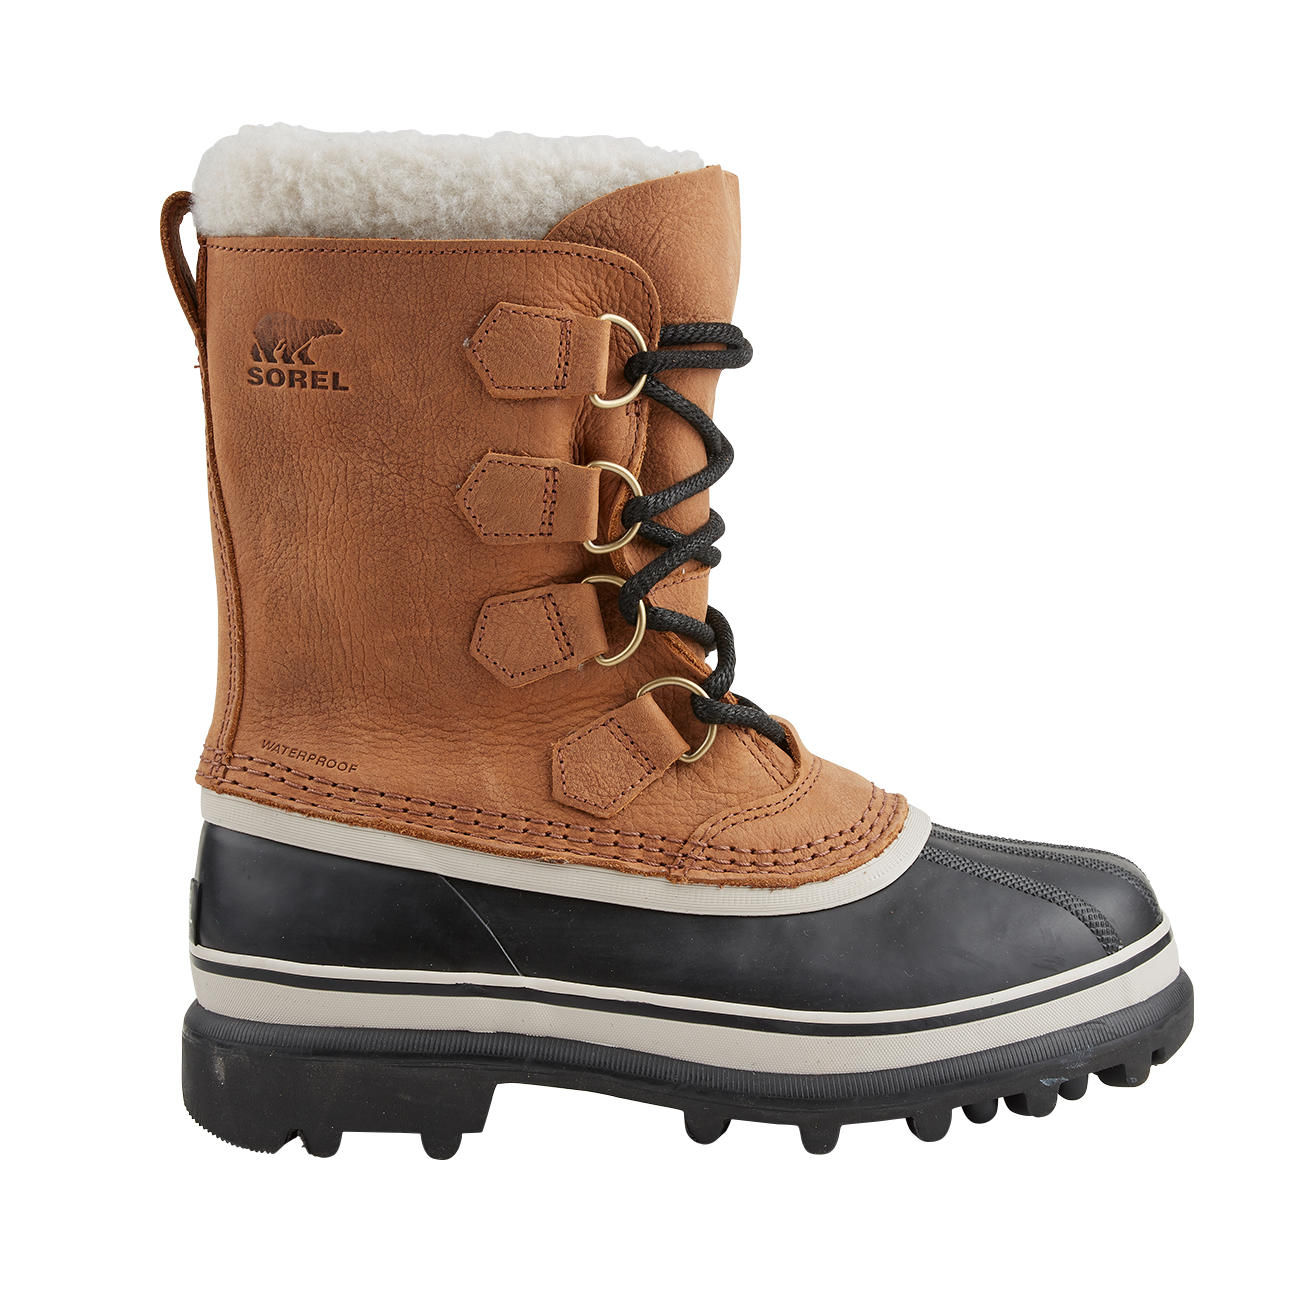 Sorel Women's Winter boots “Caribou 